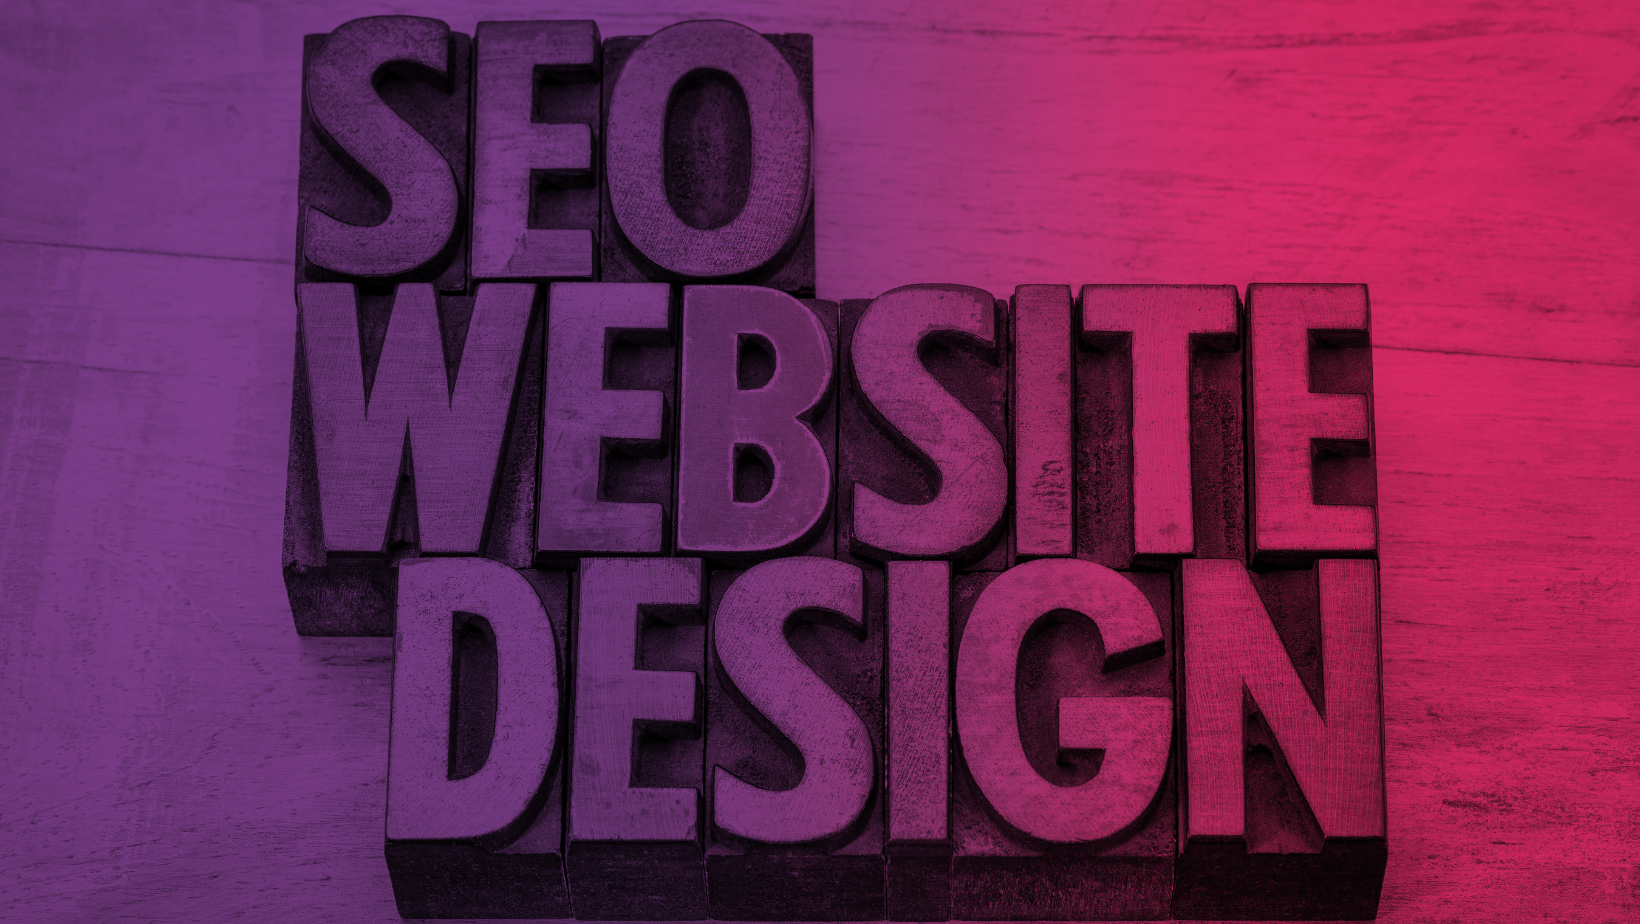 SEO Website Design